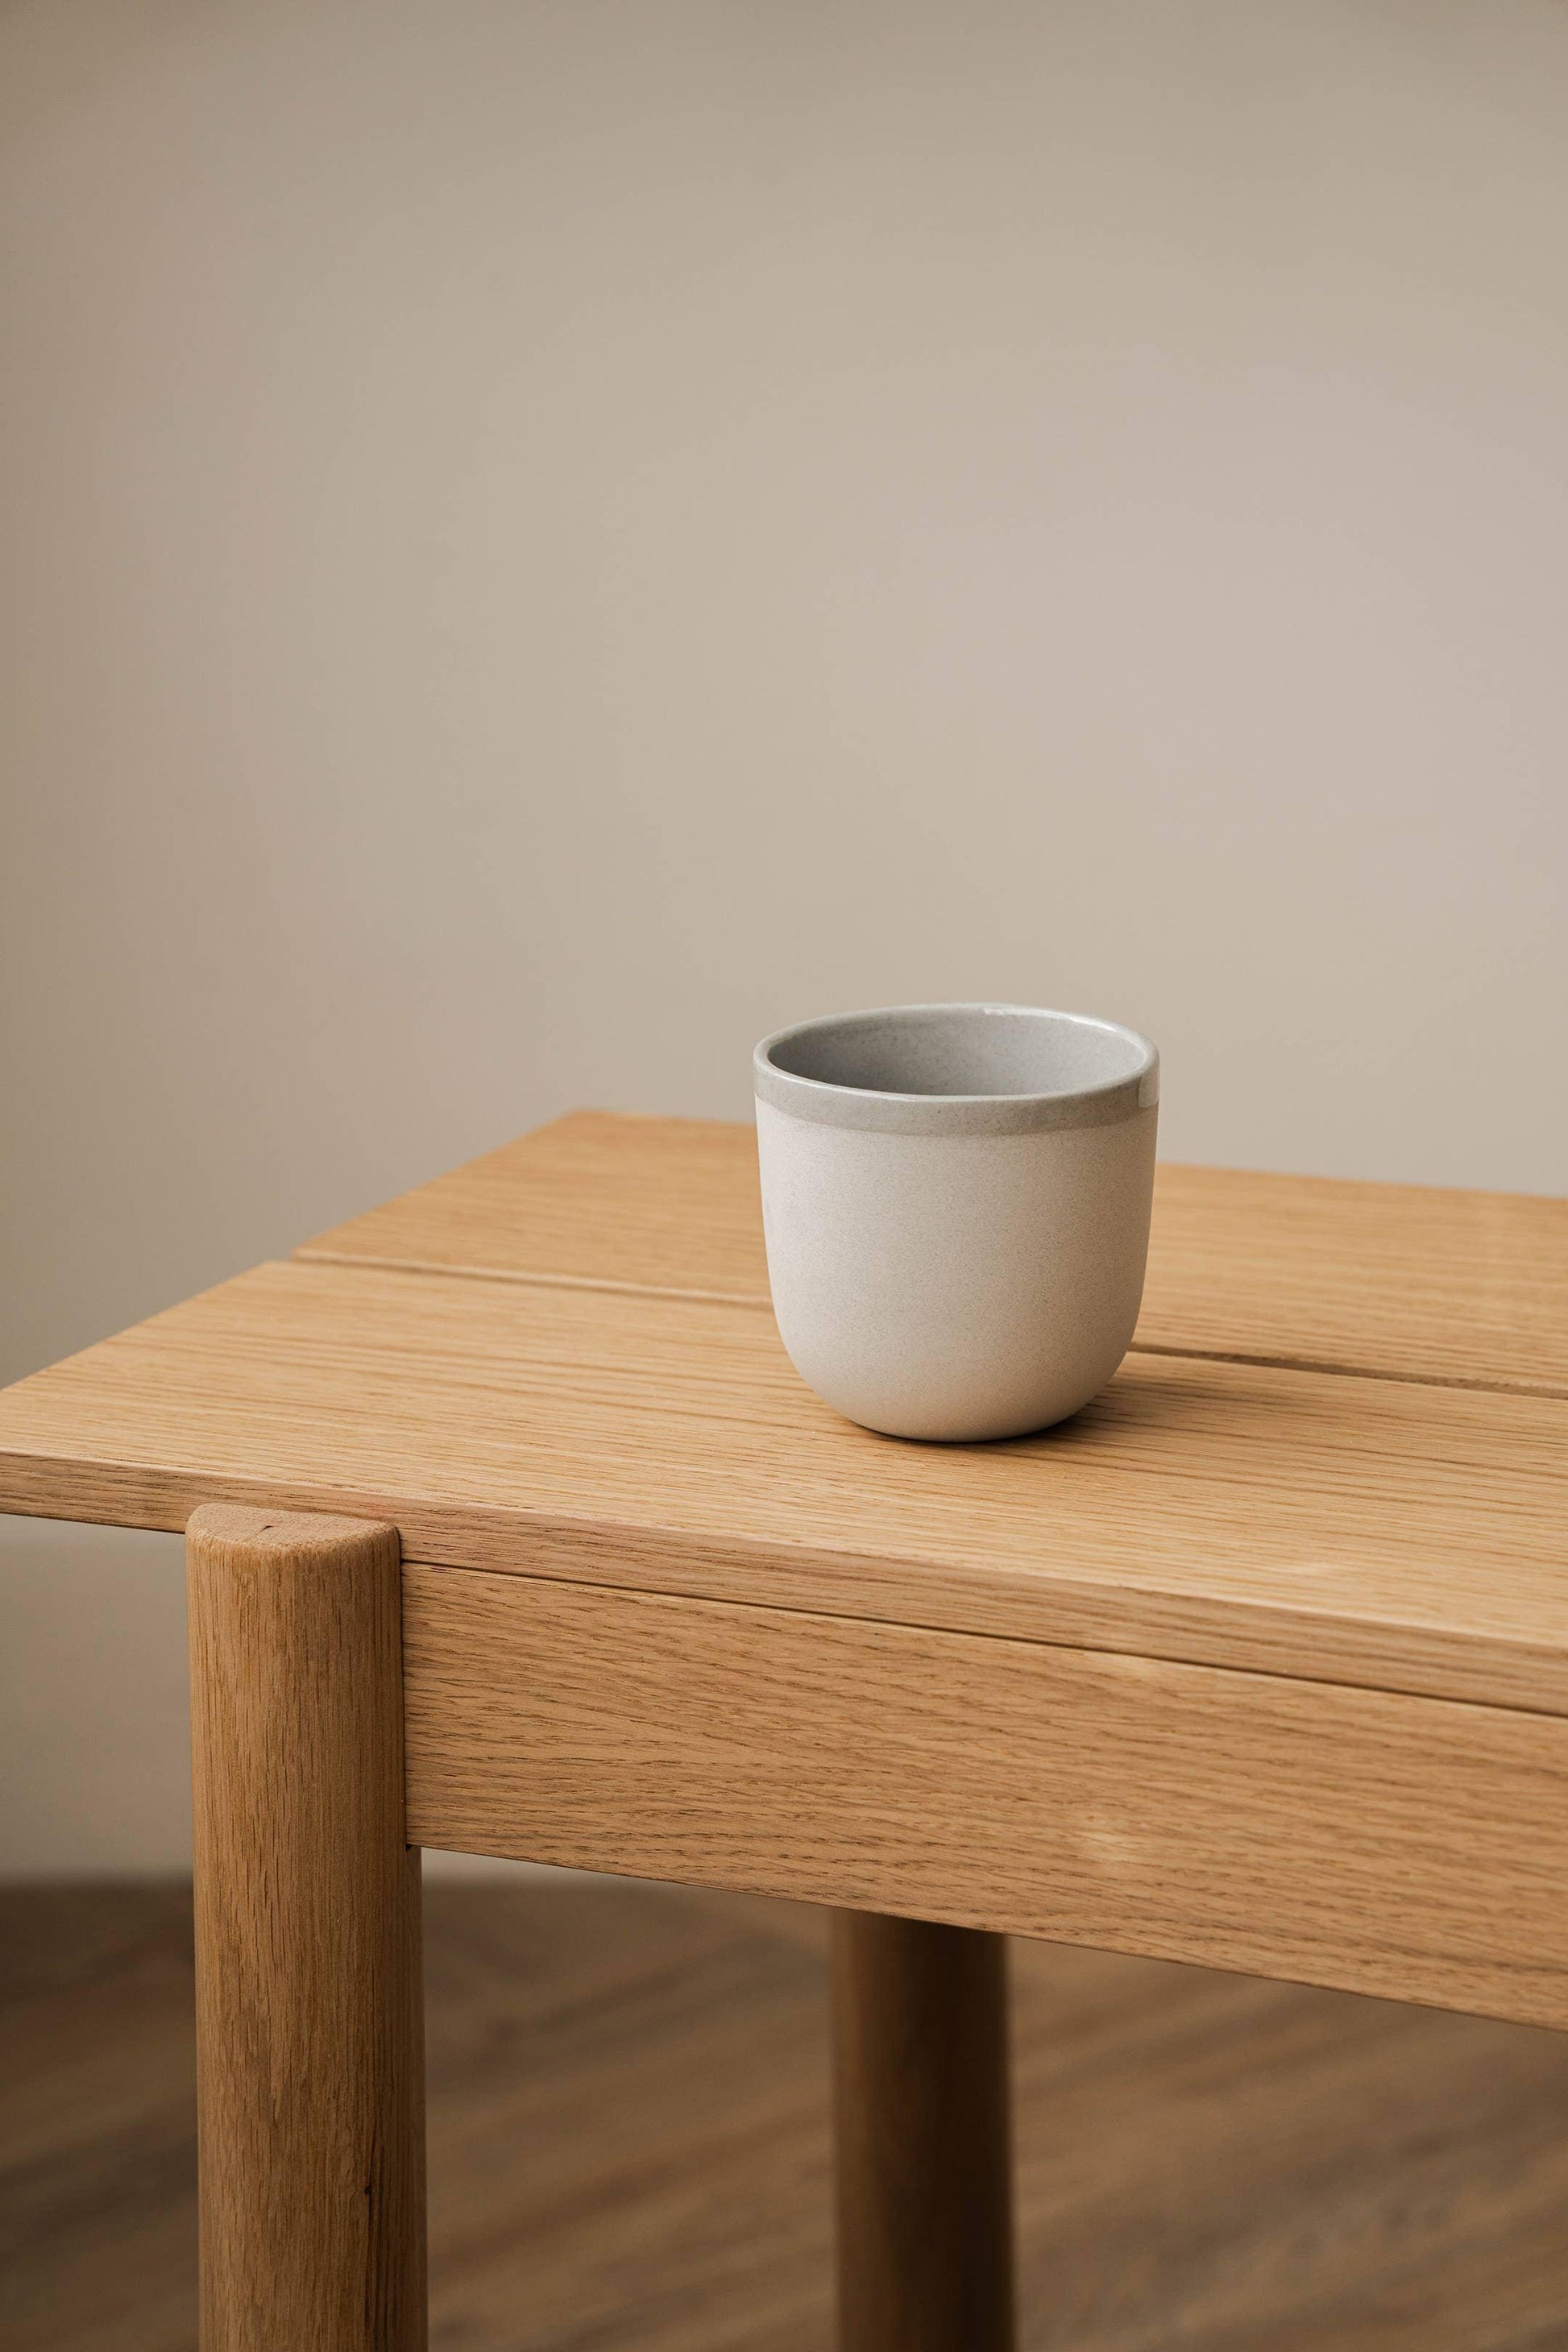 Ethical Trade Co Home Grey Sky / Coffee Cup / Plain Handmade Ukrainian Porcelain Cups